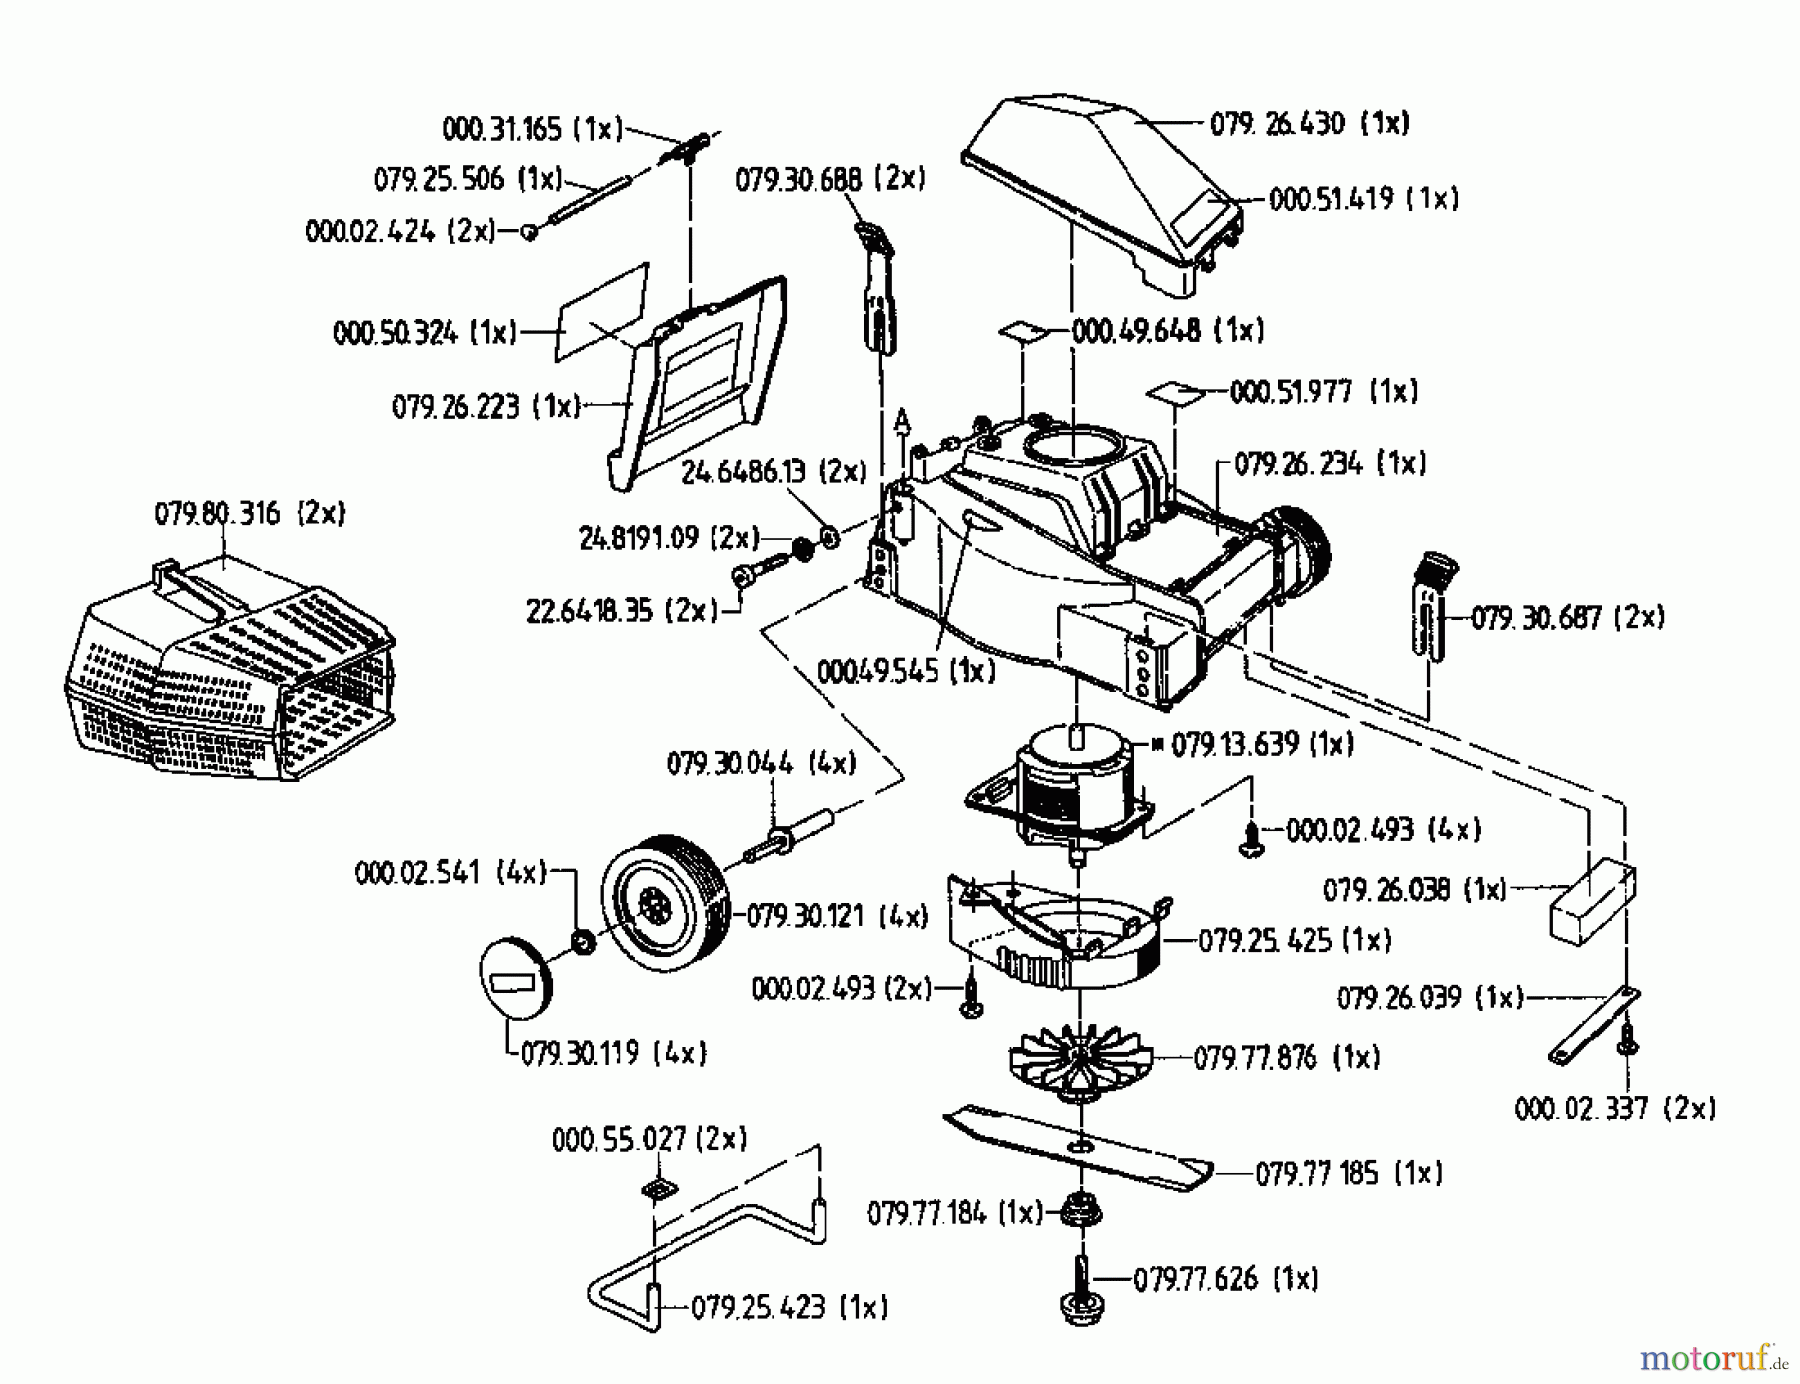  Gutbrod Electric mower HE 32 02819.05  (1995) Basic machine